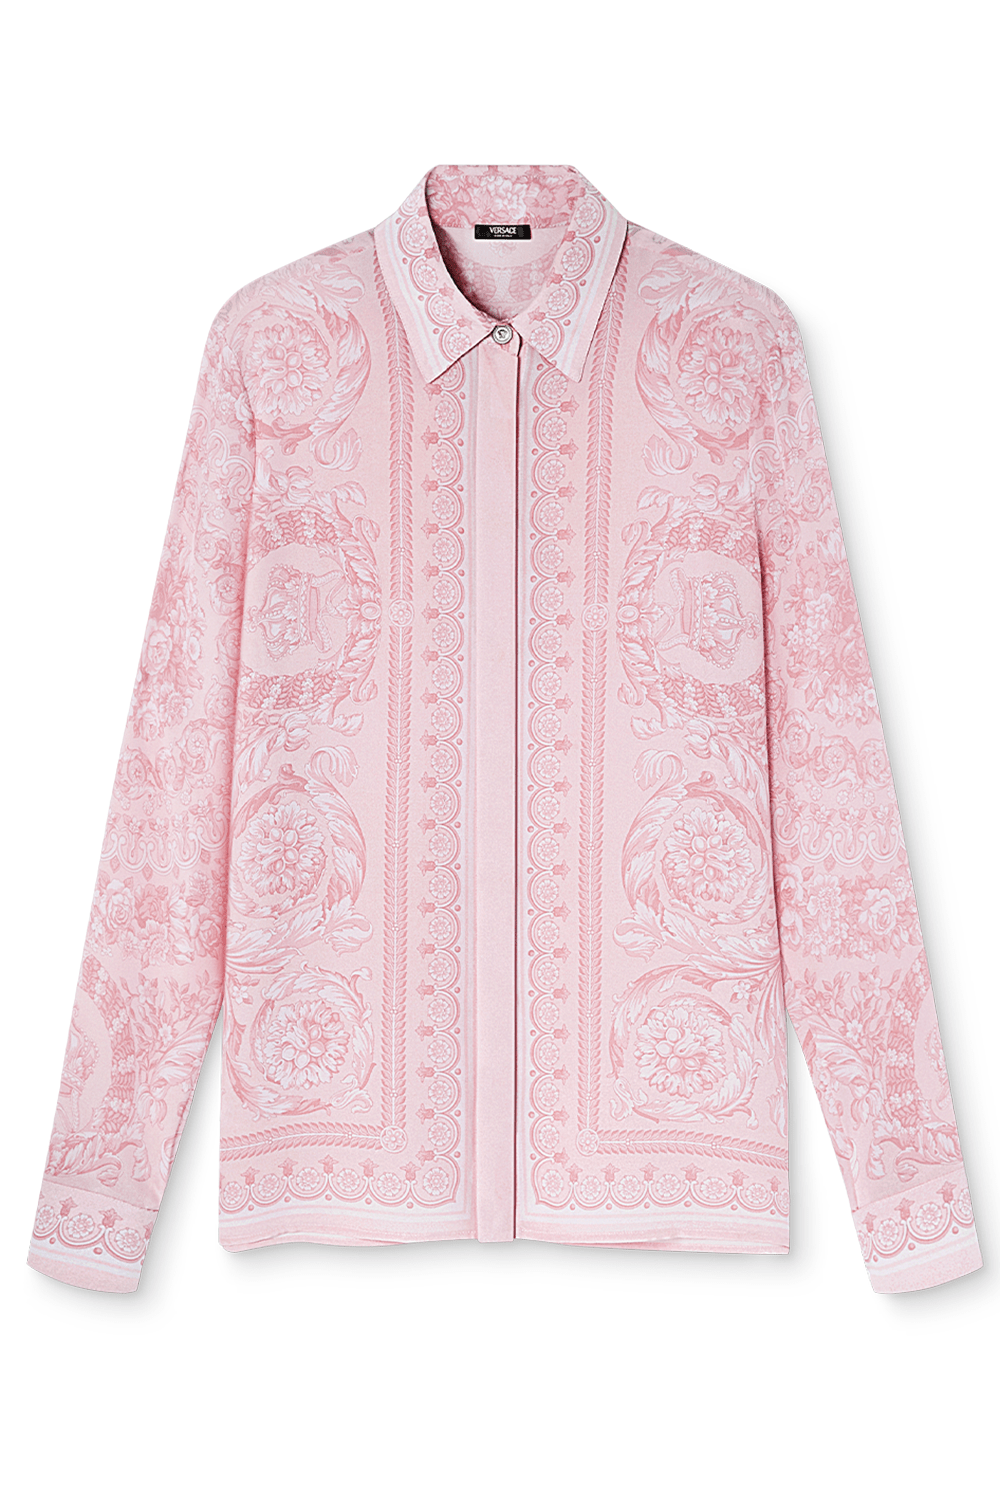 VERSACE-Barocco Shirt - Pale Pink-